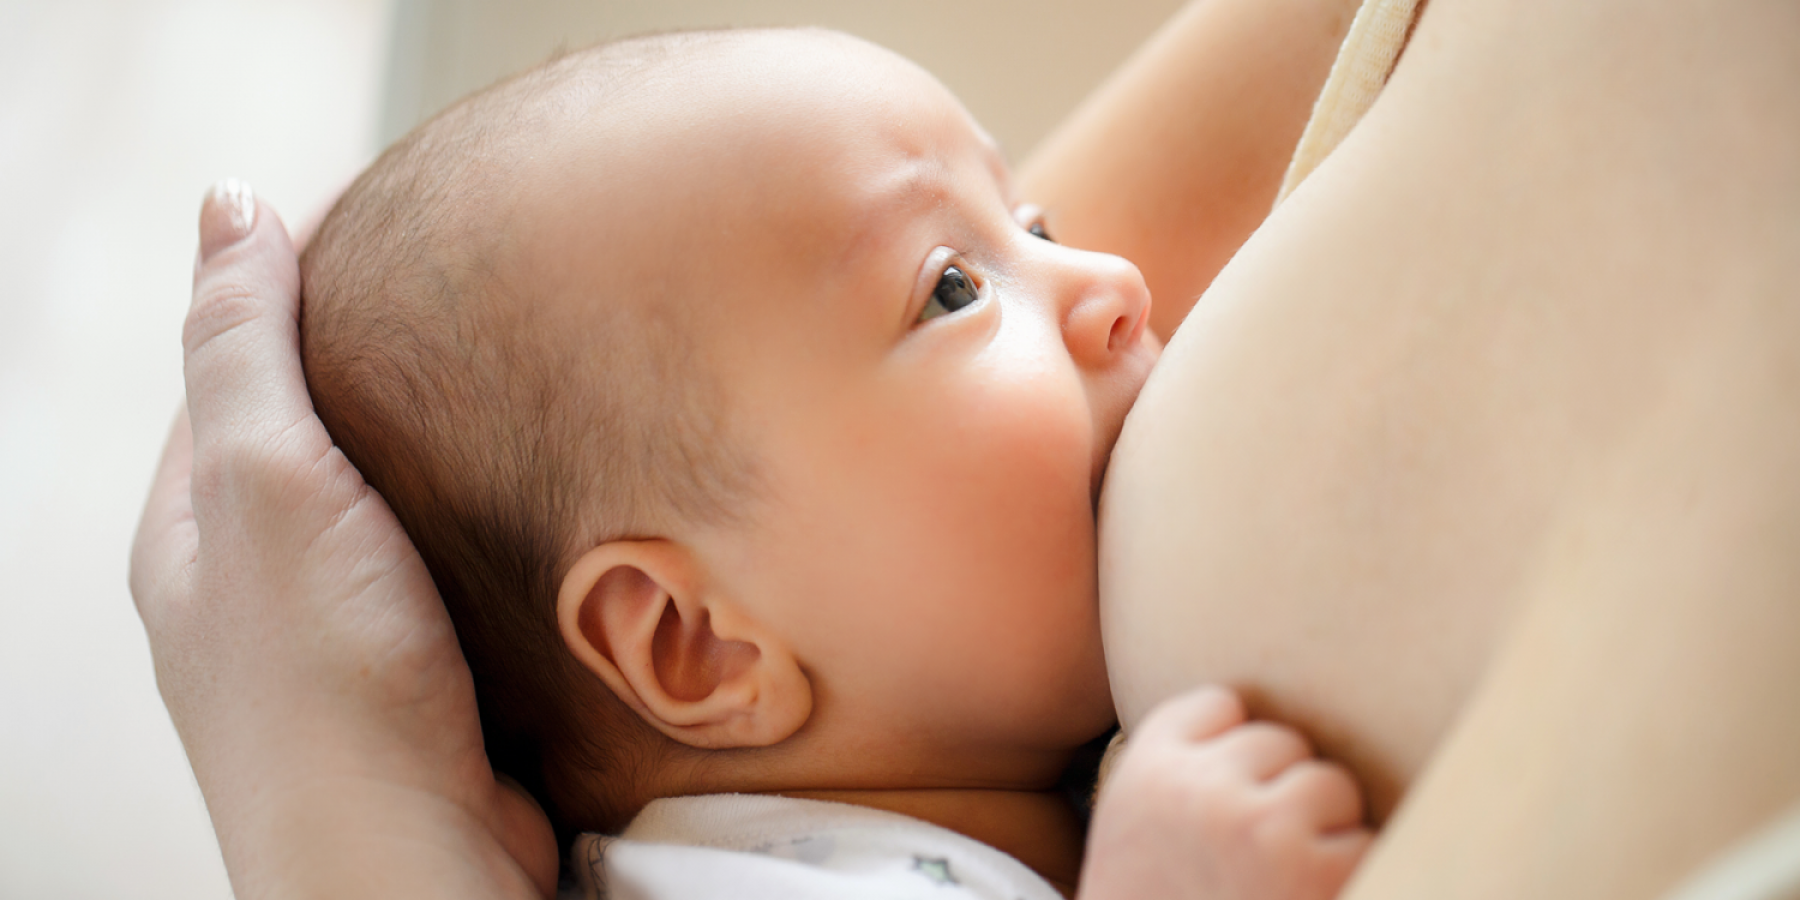 Timing of breastfeeding Information